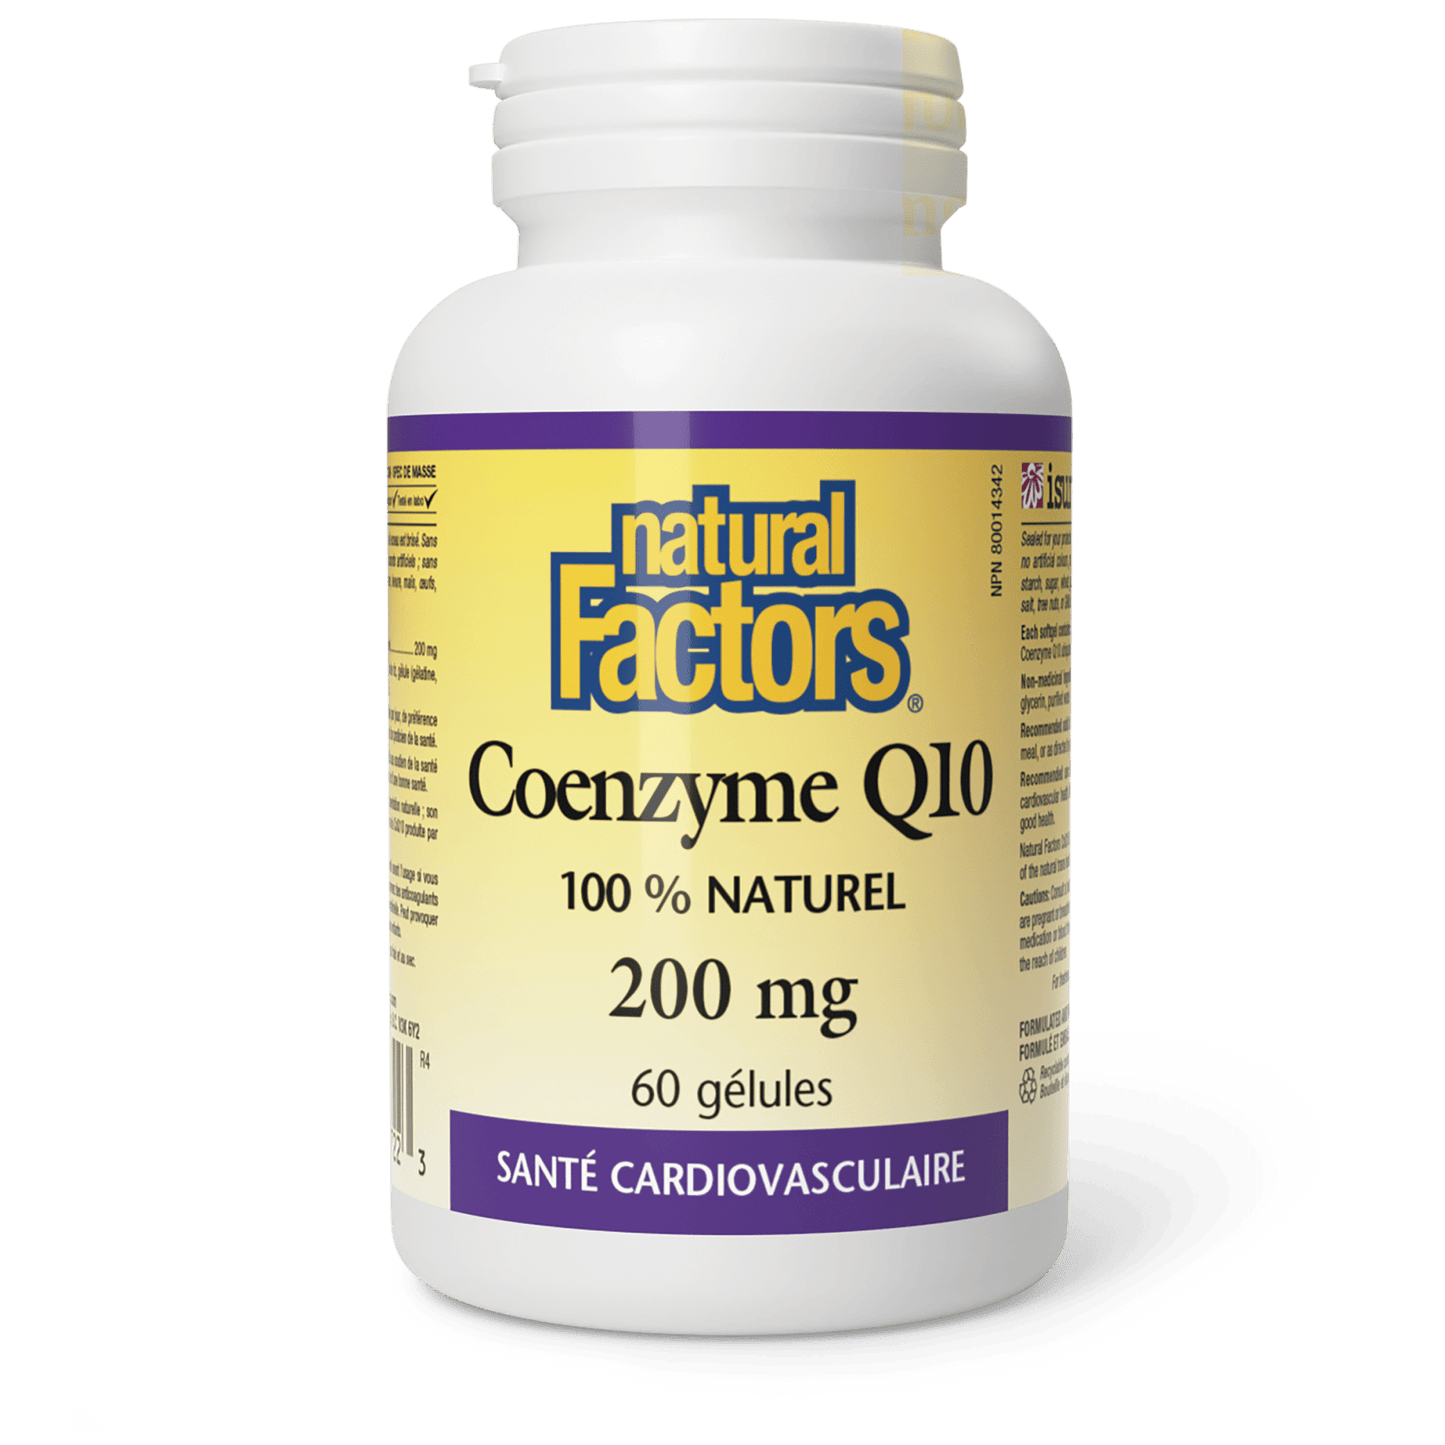 Coenzyme Q10 100 % naturel 200 mg, Natural Factors|v|image|20722